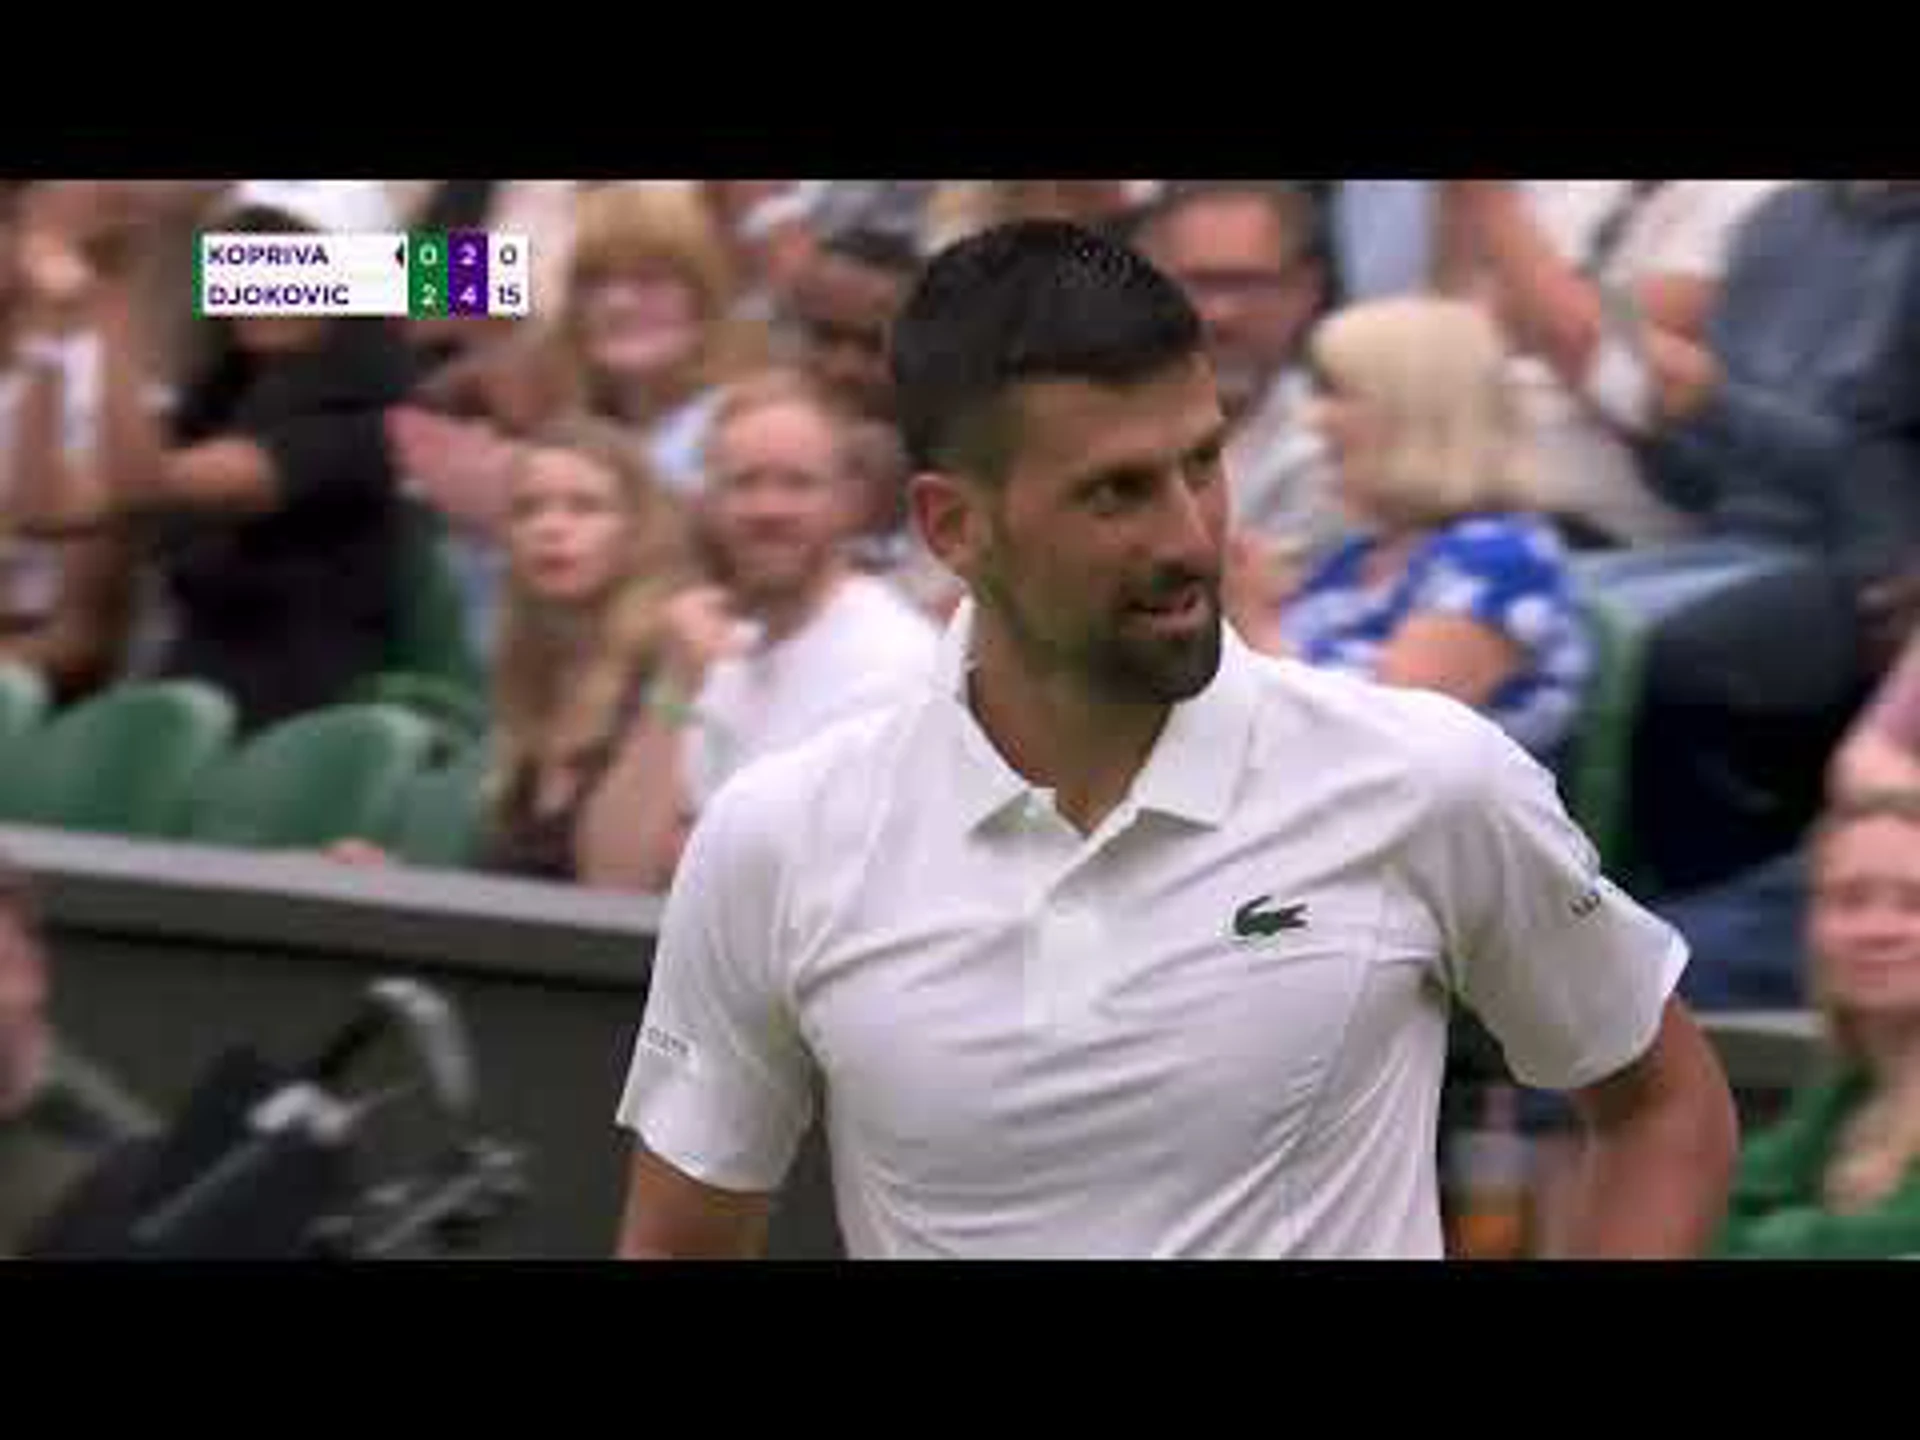 Vita Kopriva v Novak Djokovic | Match Highlights | Wimbledon